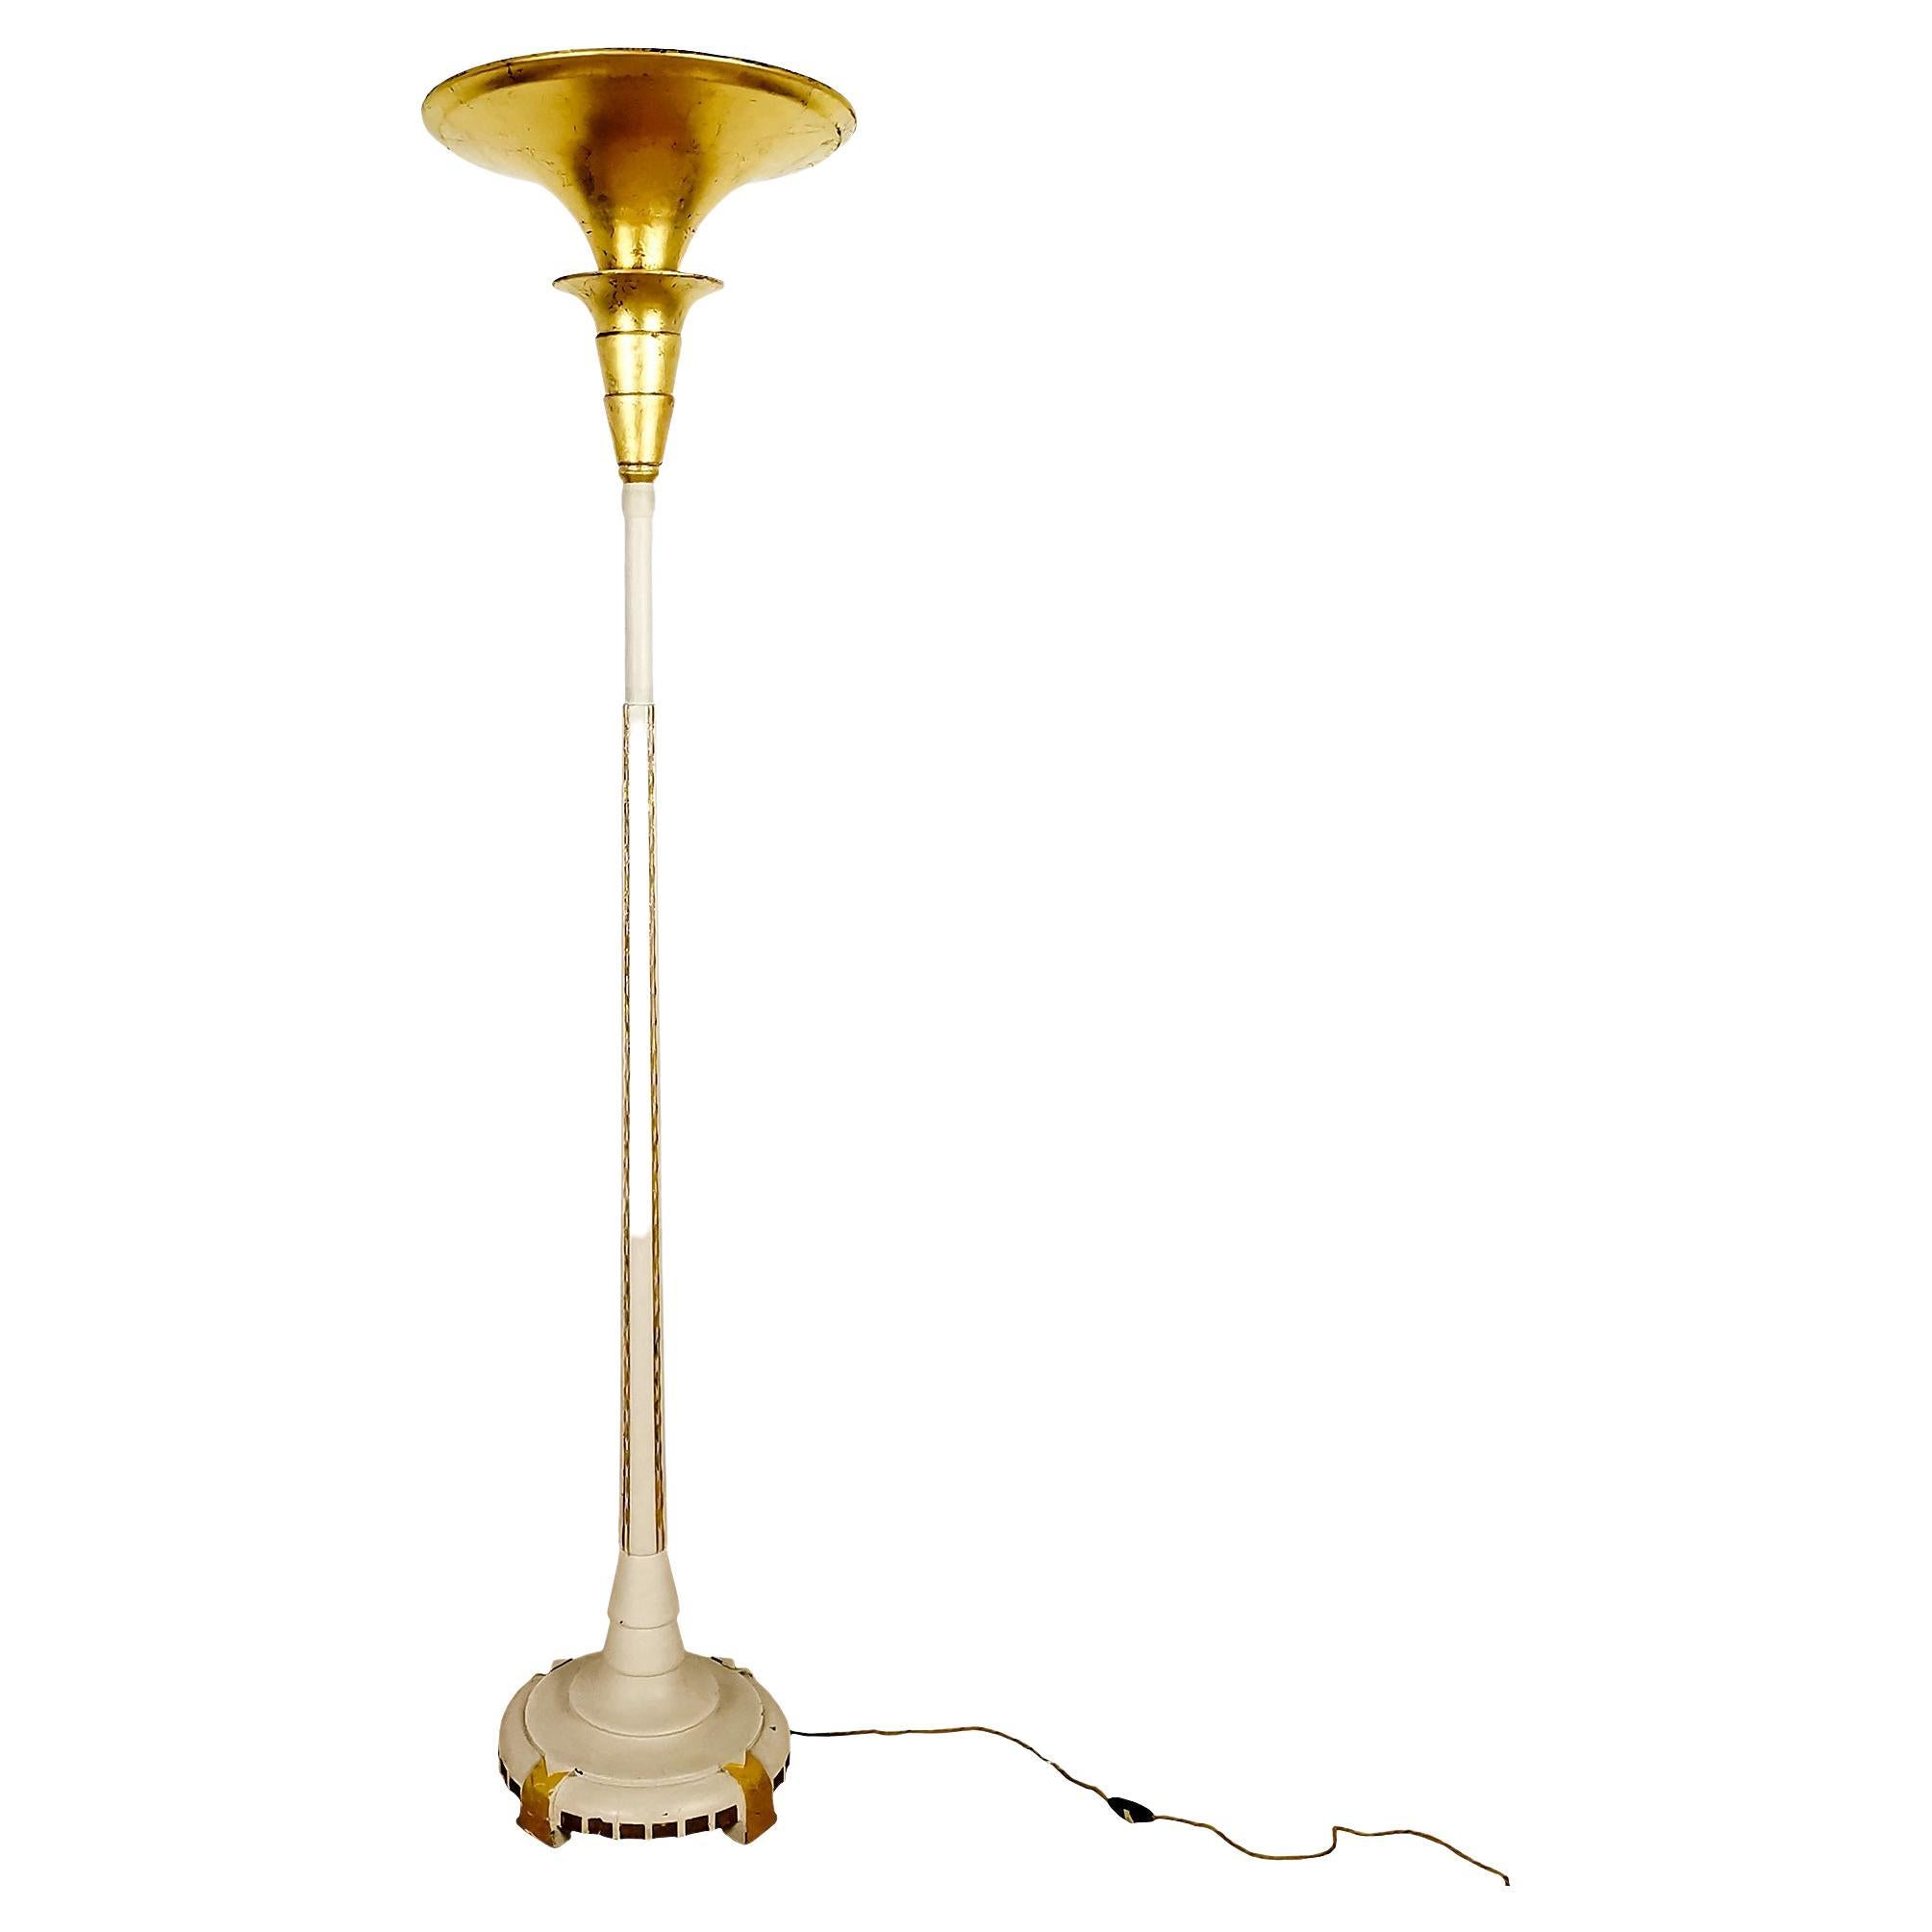 Art Deco Floor Lamp in Carved Solid Wood and Golden Details - Belgium 1925 For Sale